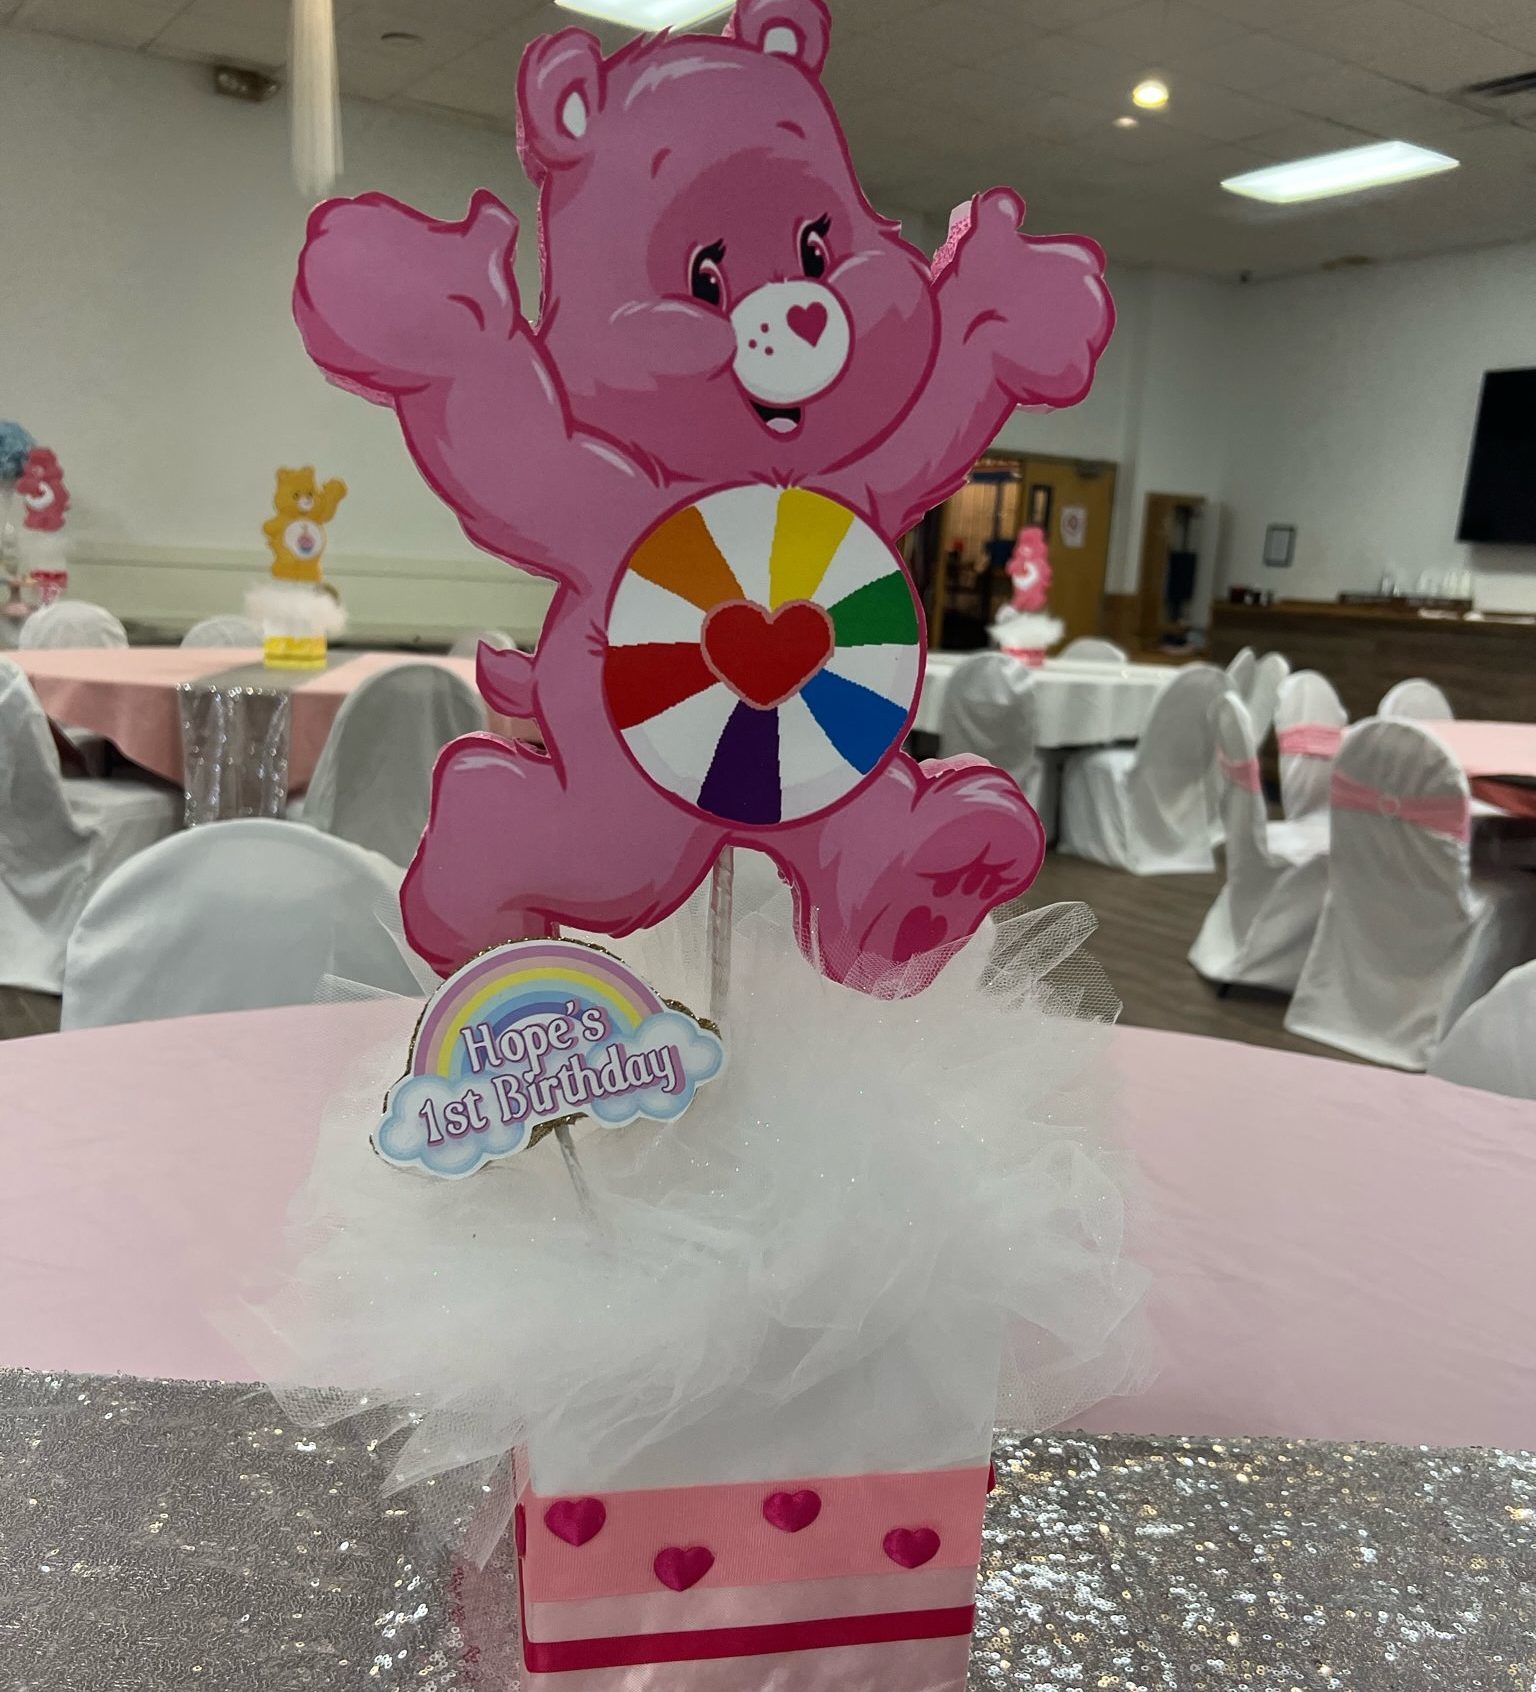 Sweet Teddy Bear Teddy Bear Baby Shower Wrapping Paper